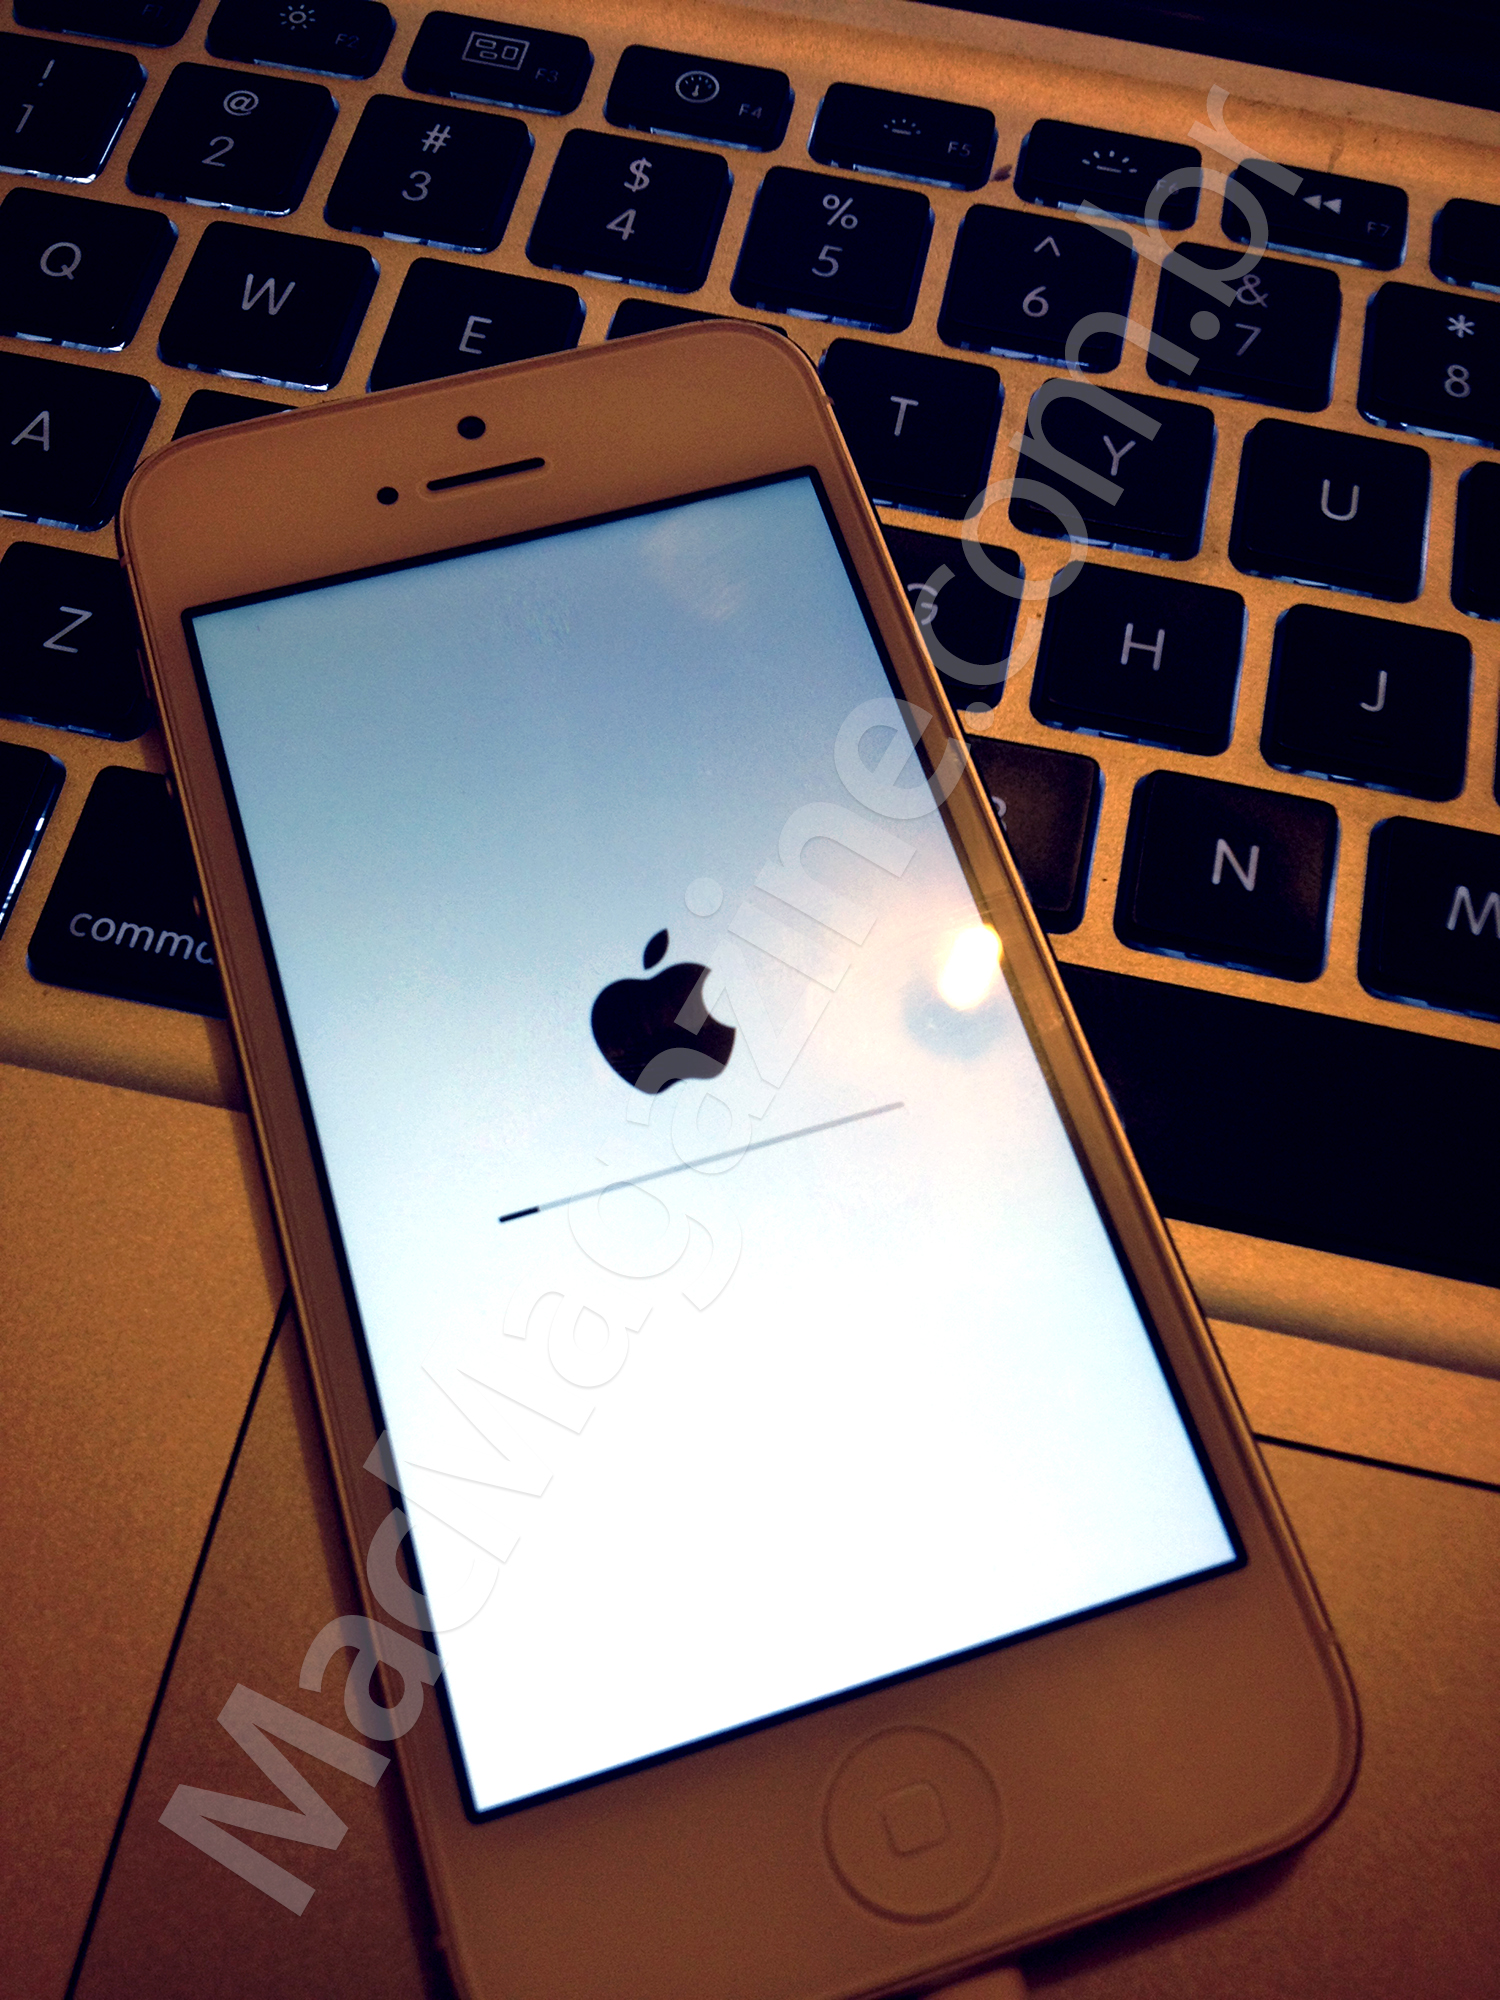 Instalando o iOS 7 num iPhone branco